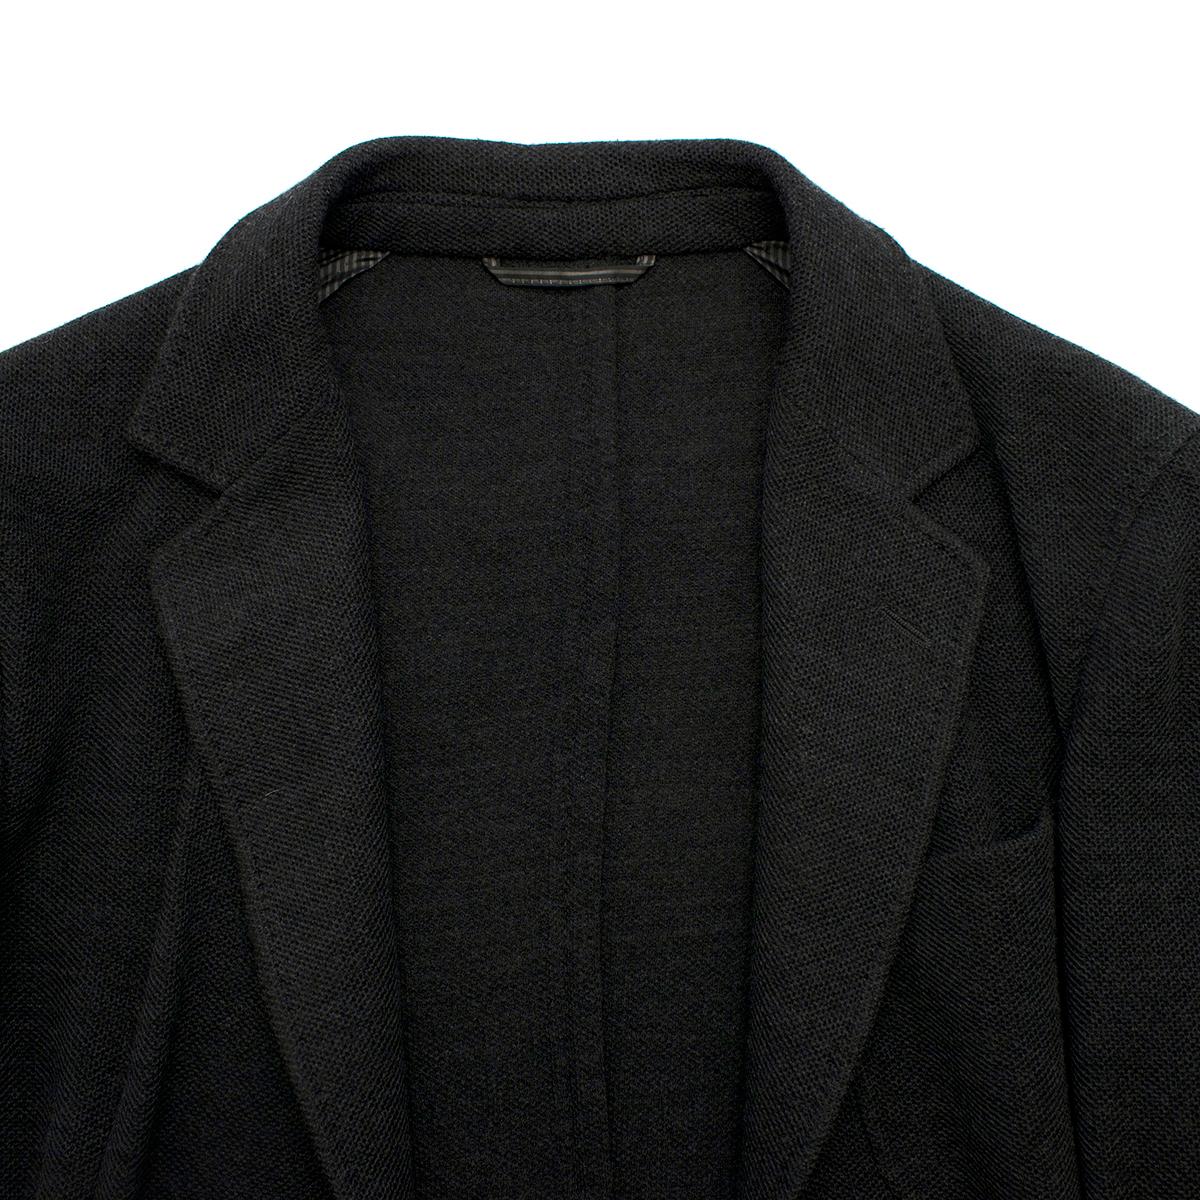 Black Ermenegildo Zegna Dark Grey Wool Single Breasted Jacket - Us size  For Sale